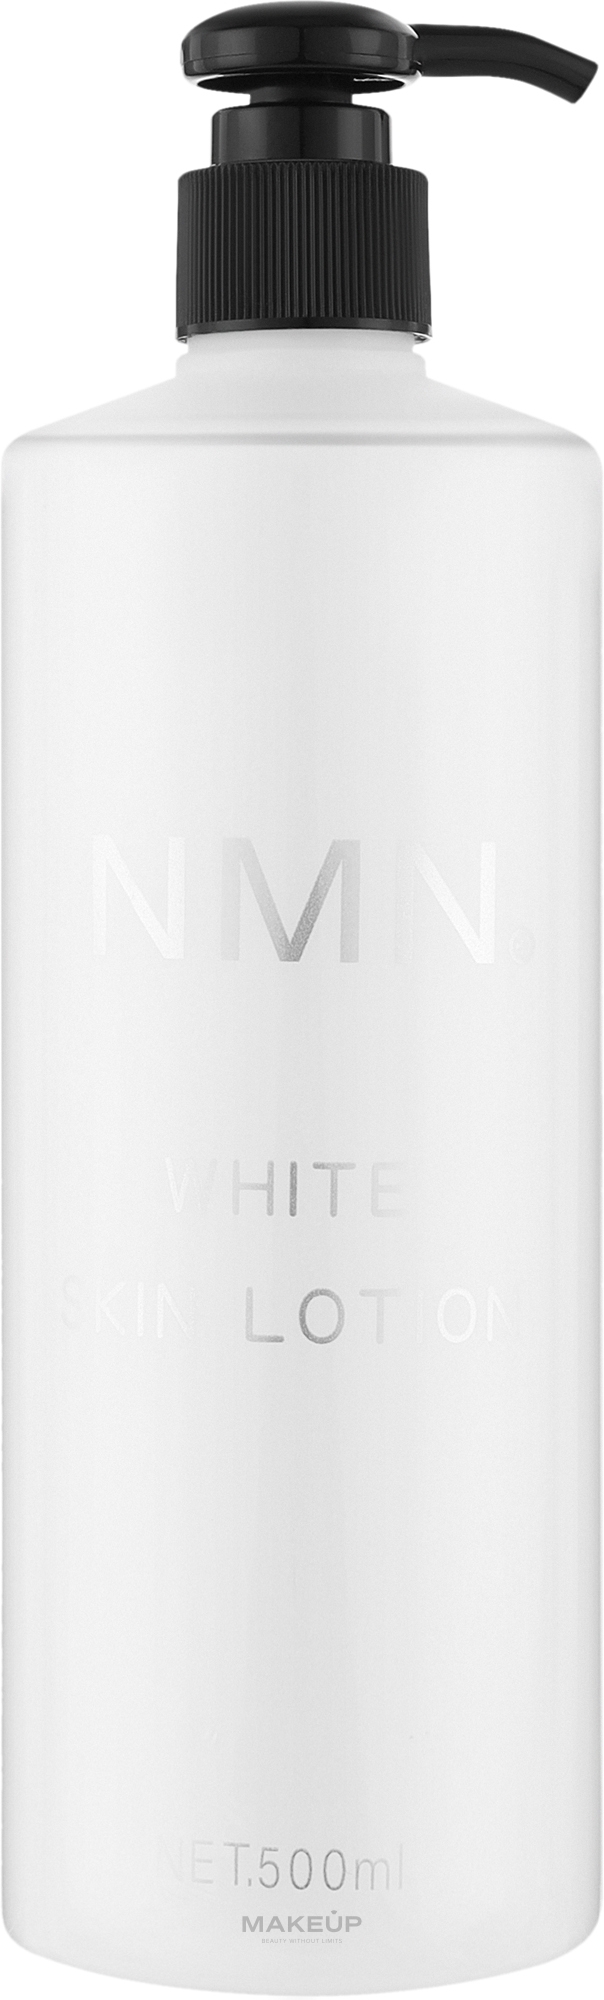 Омолаживающий лосьон-тоник для лица - Kor Japan NMN White Skin Lotion — фото 500ml